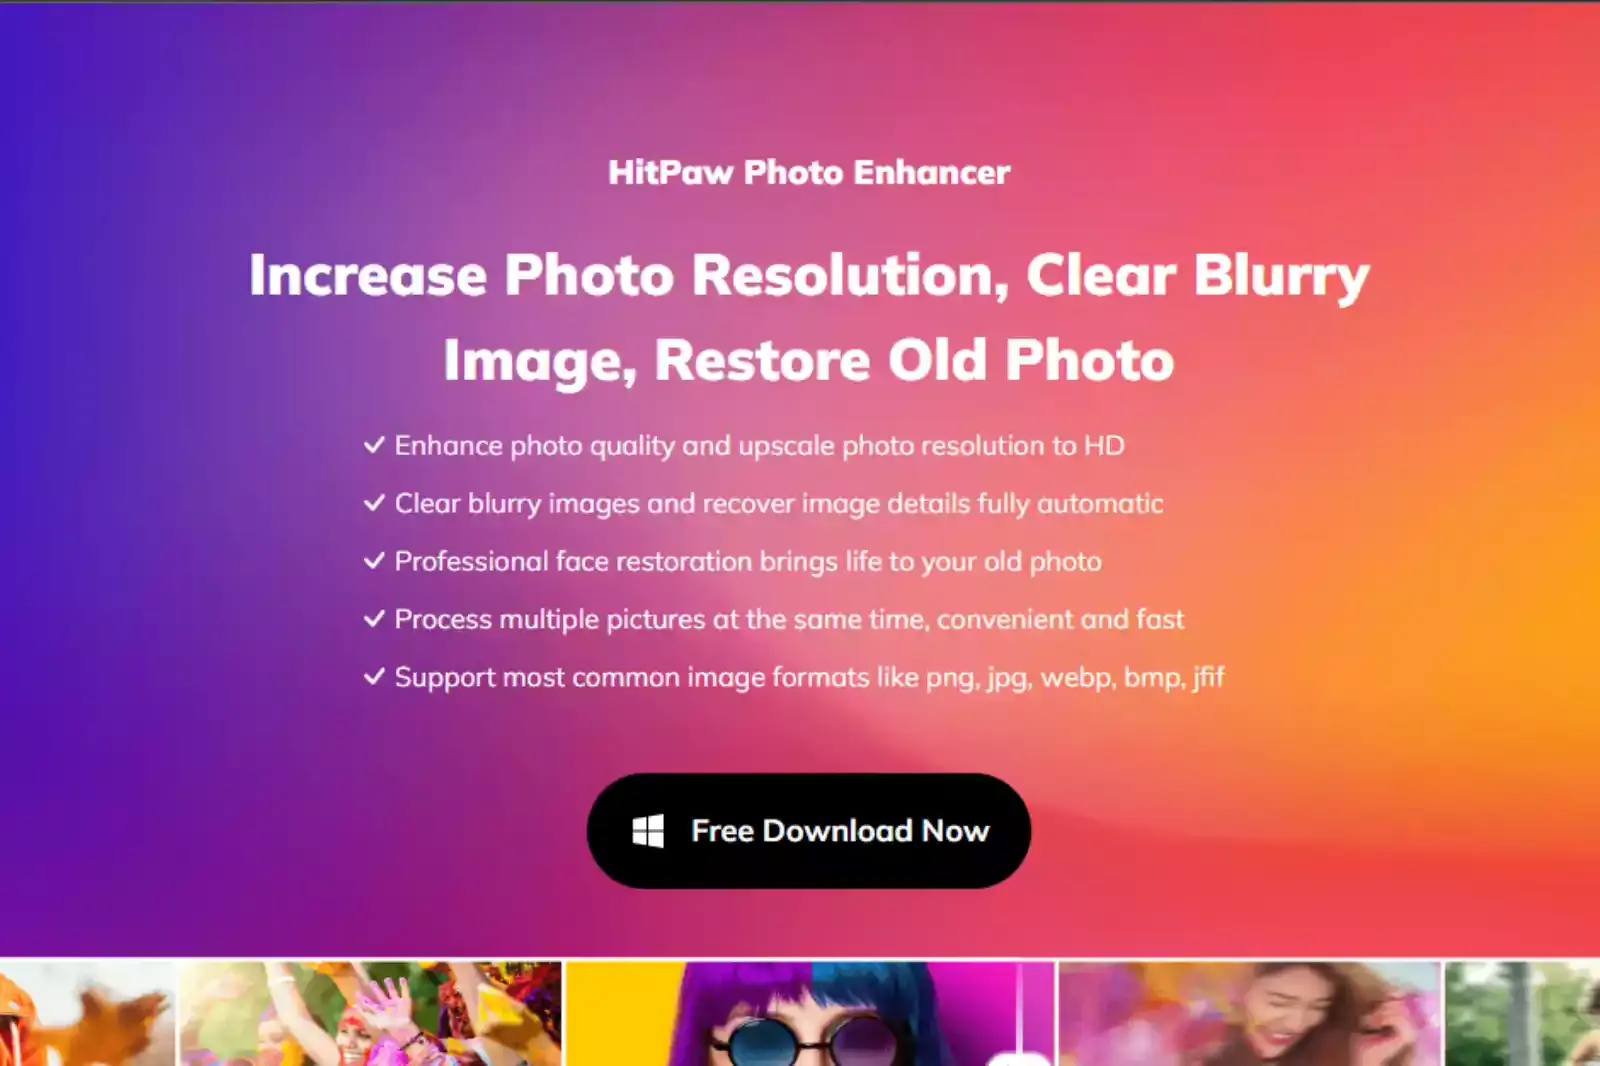 Home Page of HitPaw Photo Enhancer